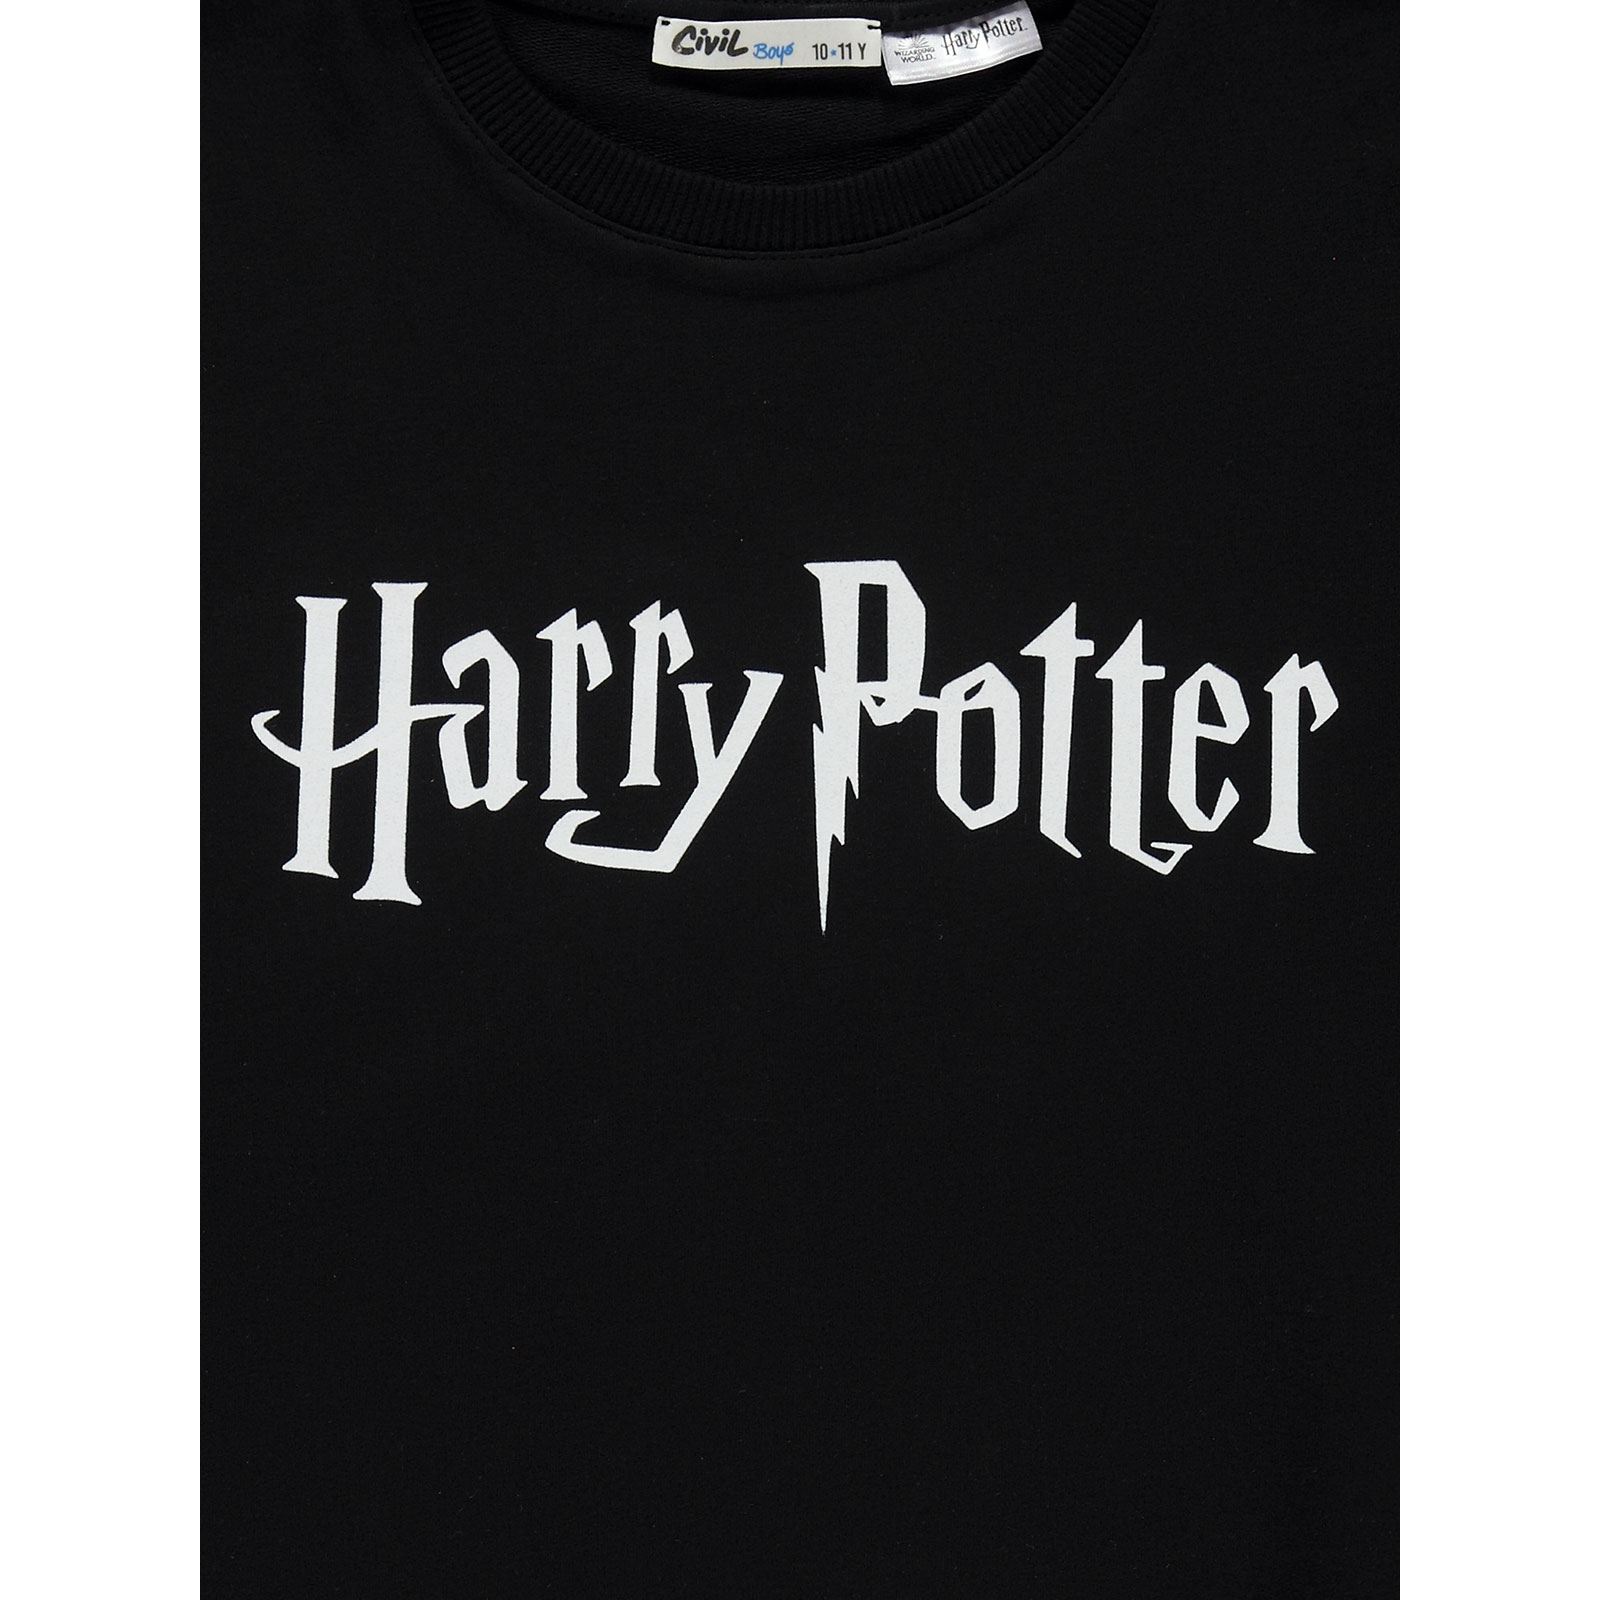 Harry Potter Erkek Çocuk Sweatshirt 10-13 Yaş Siyah